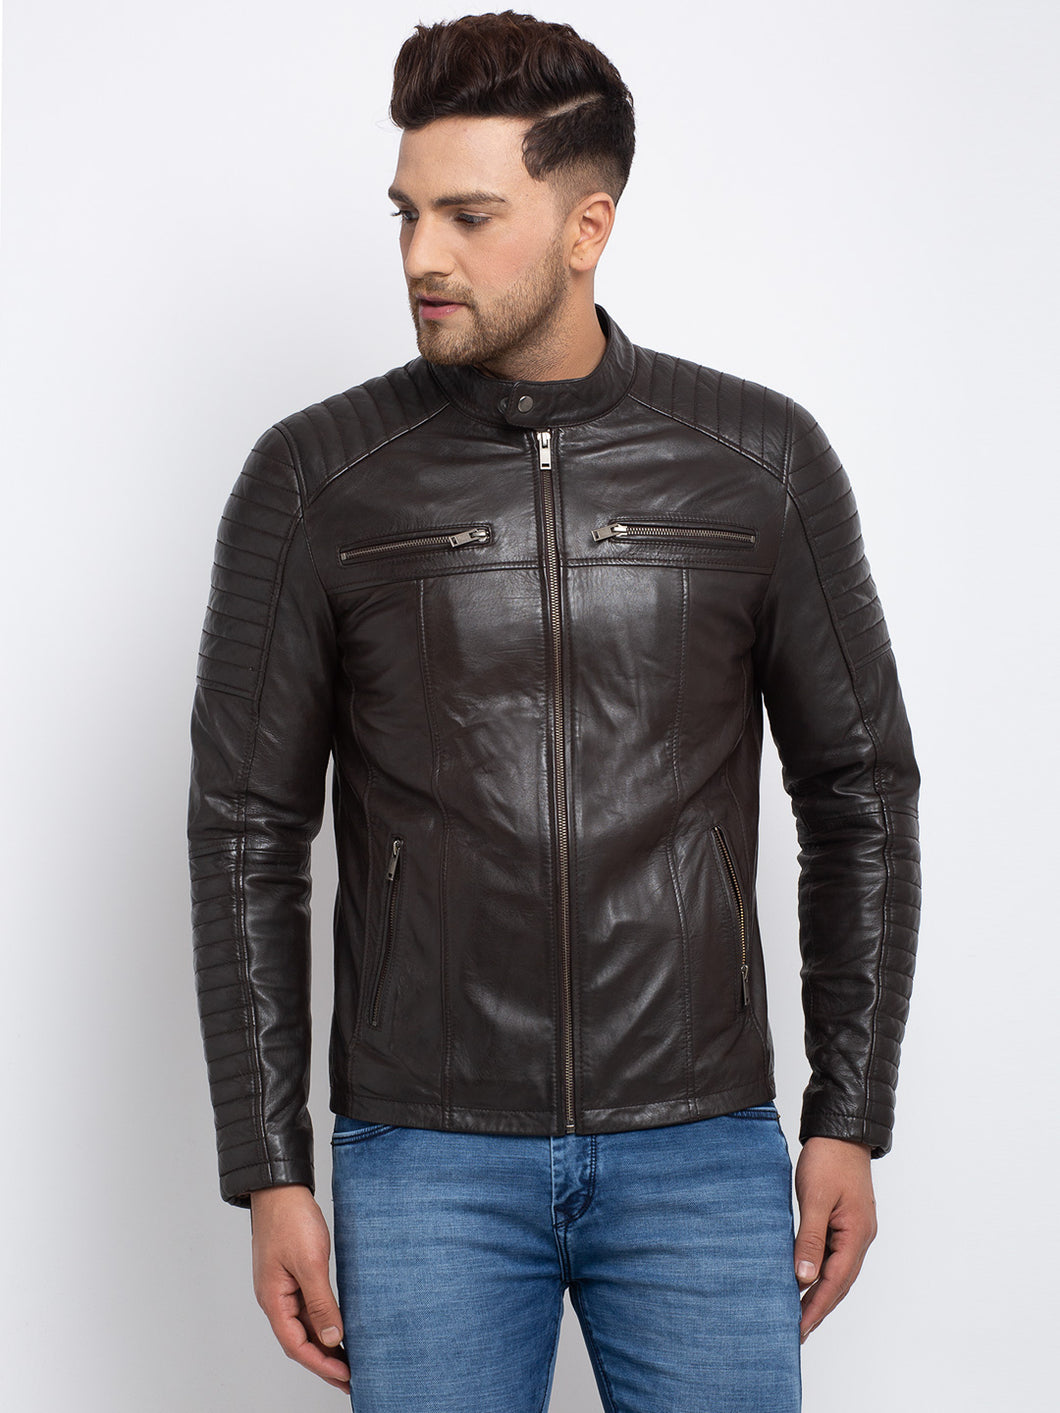 Teakwood Leathers  Men's 100% Genuine Brown Leather Jacket